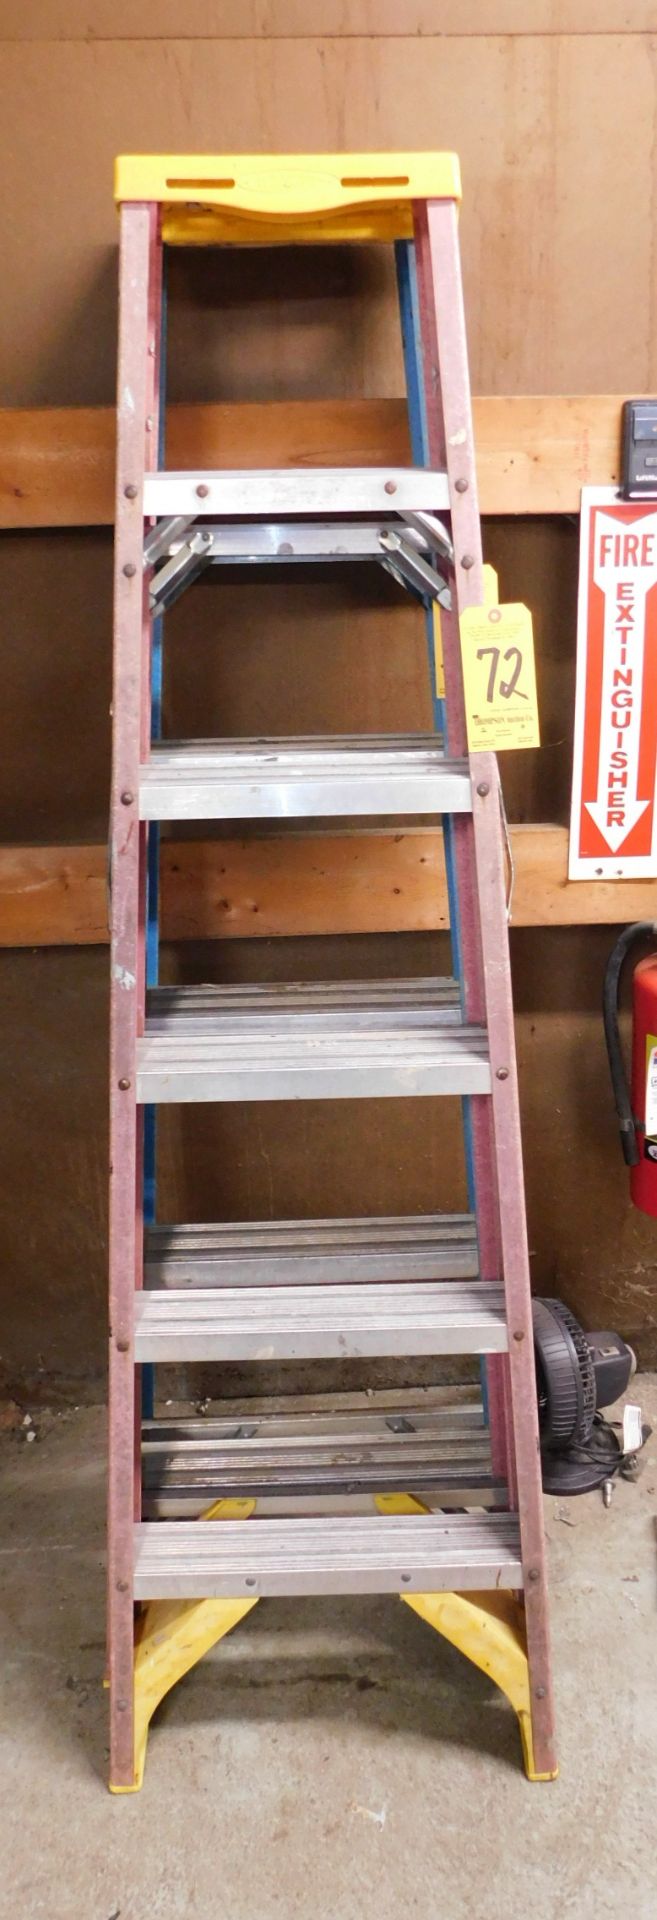 Fiberglass Step Ladder, 6 Ft., Pataskala Location